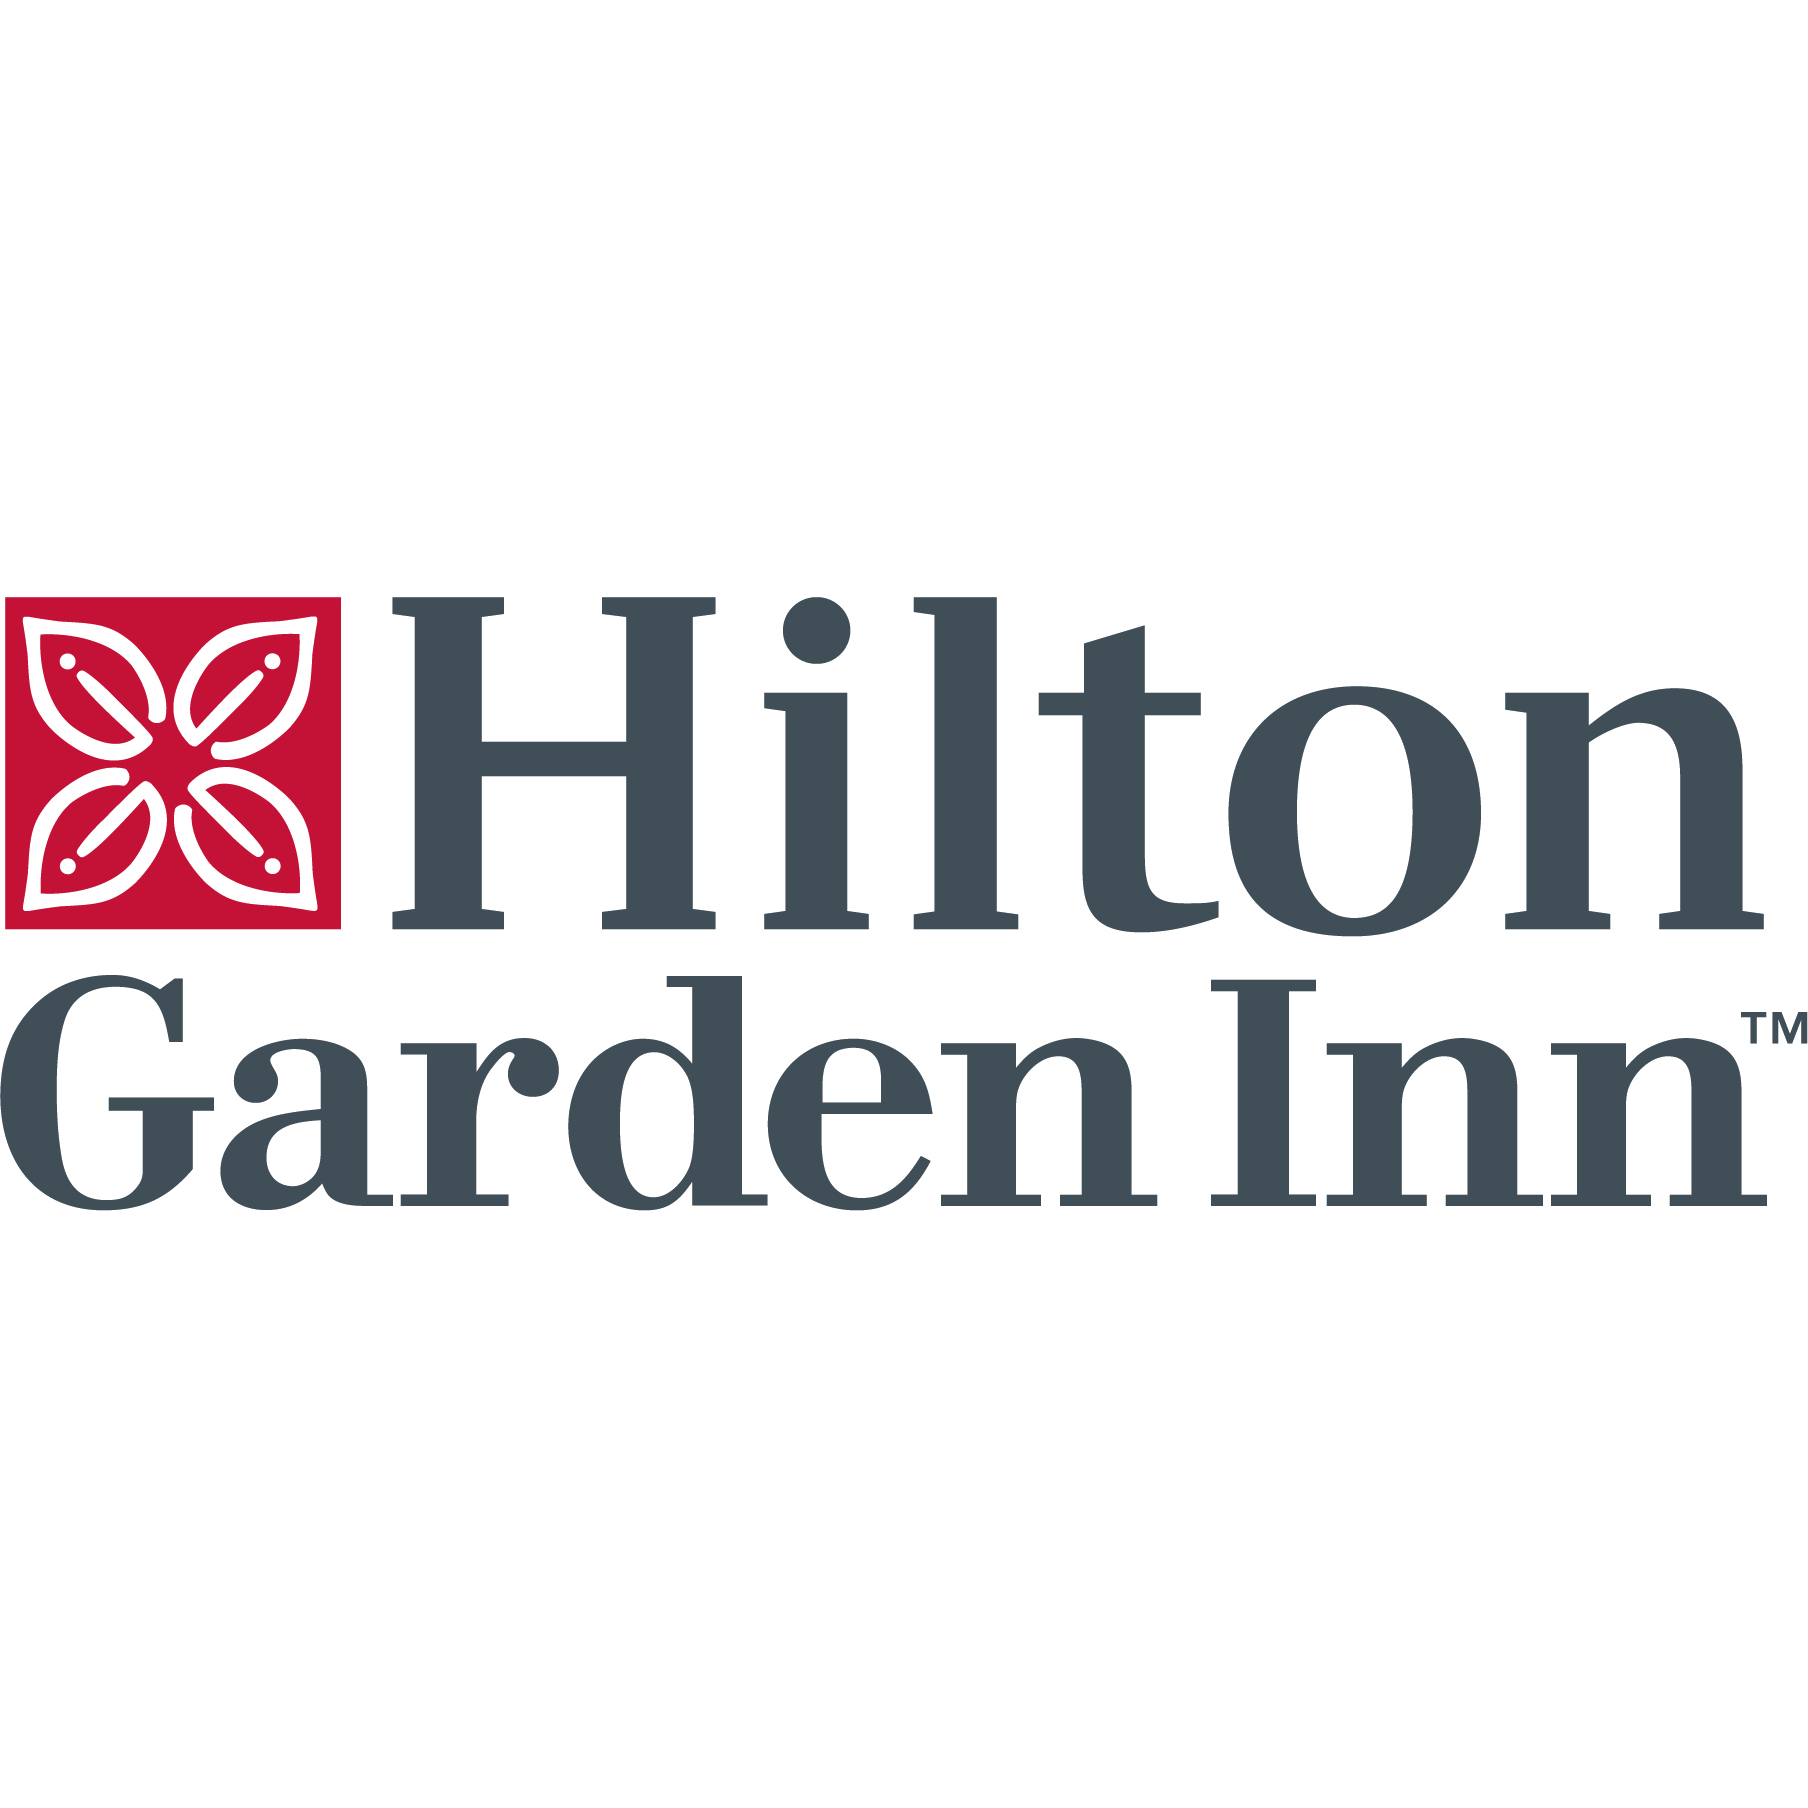 Hilton Garden Inn Fort Myers - Fort Myers, FL 33907 - (239)790-3500 | ShowMeLocal.com